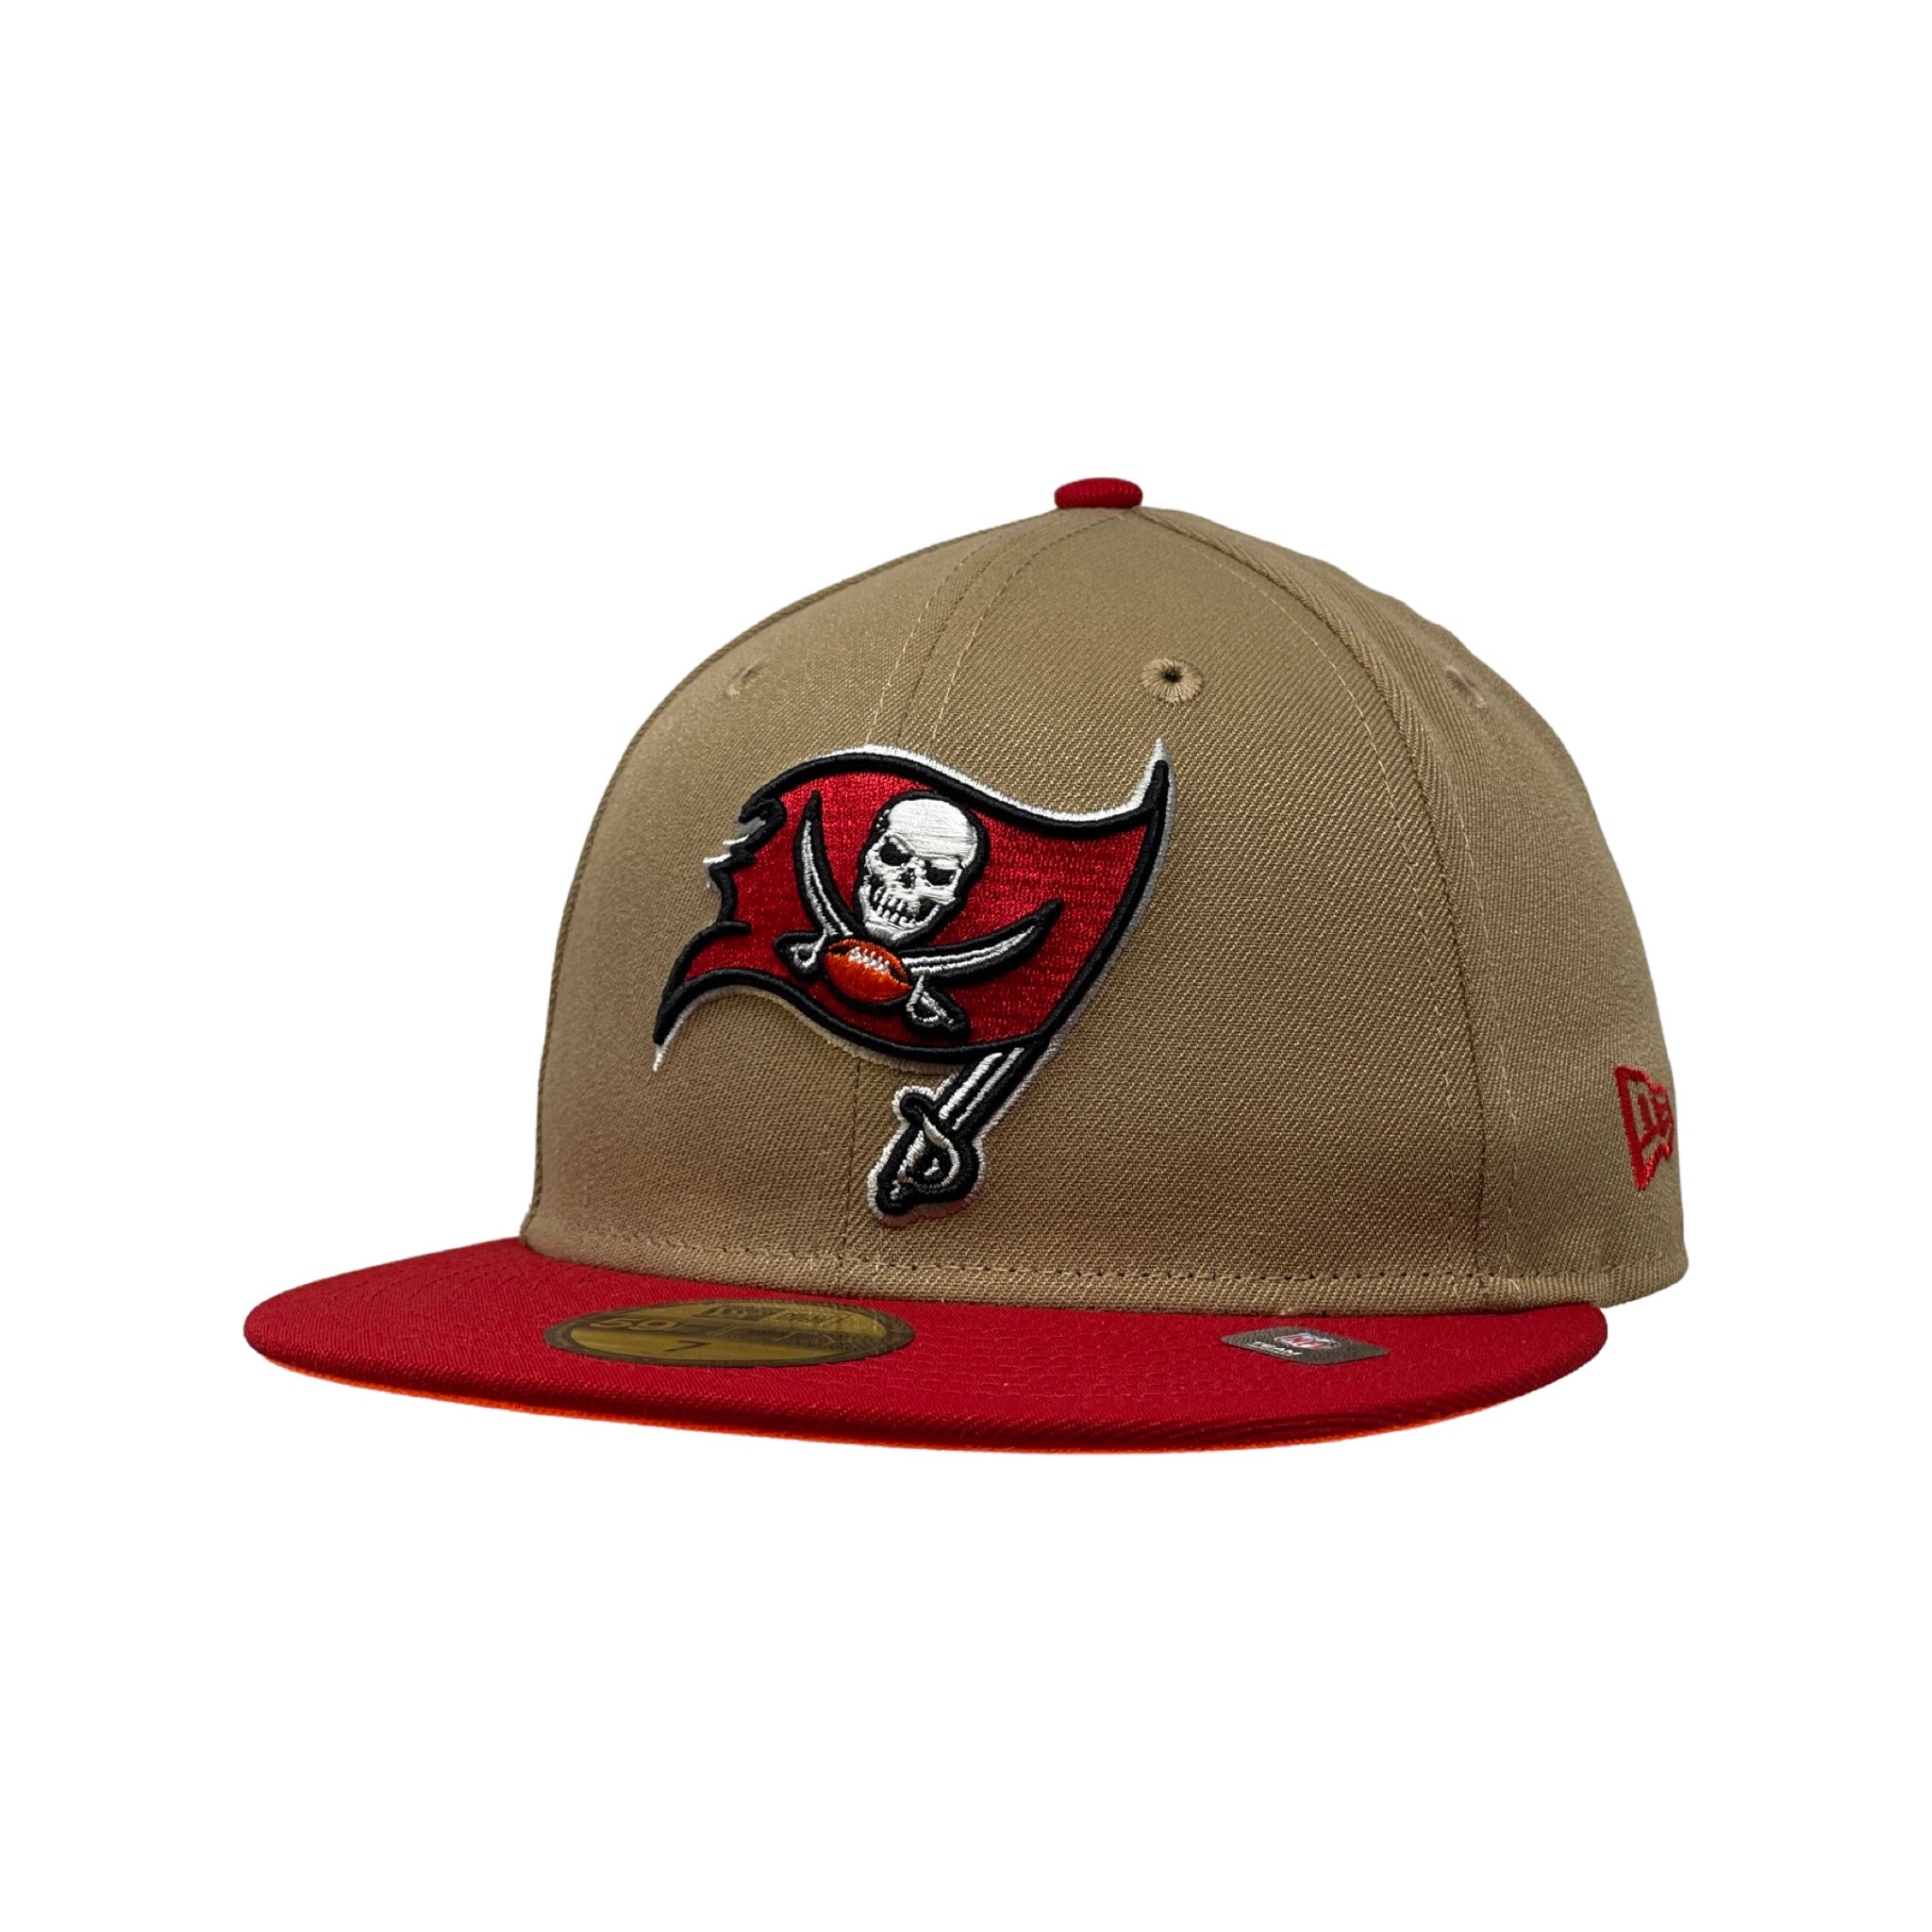 New Era Hat - Tamapa Bay Buccaneers - Khaki / Red